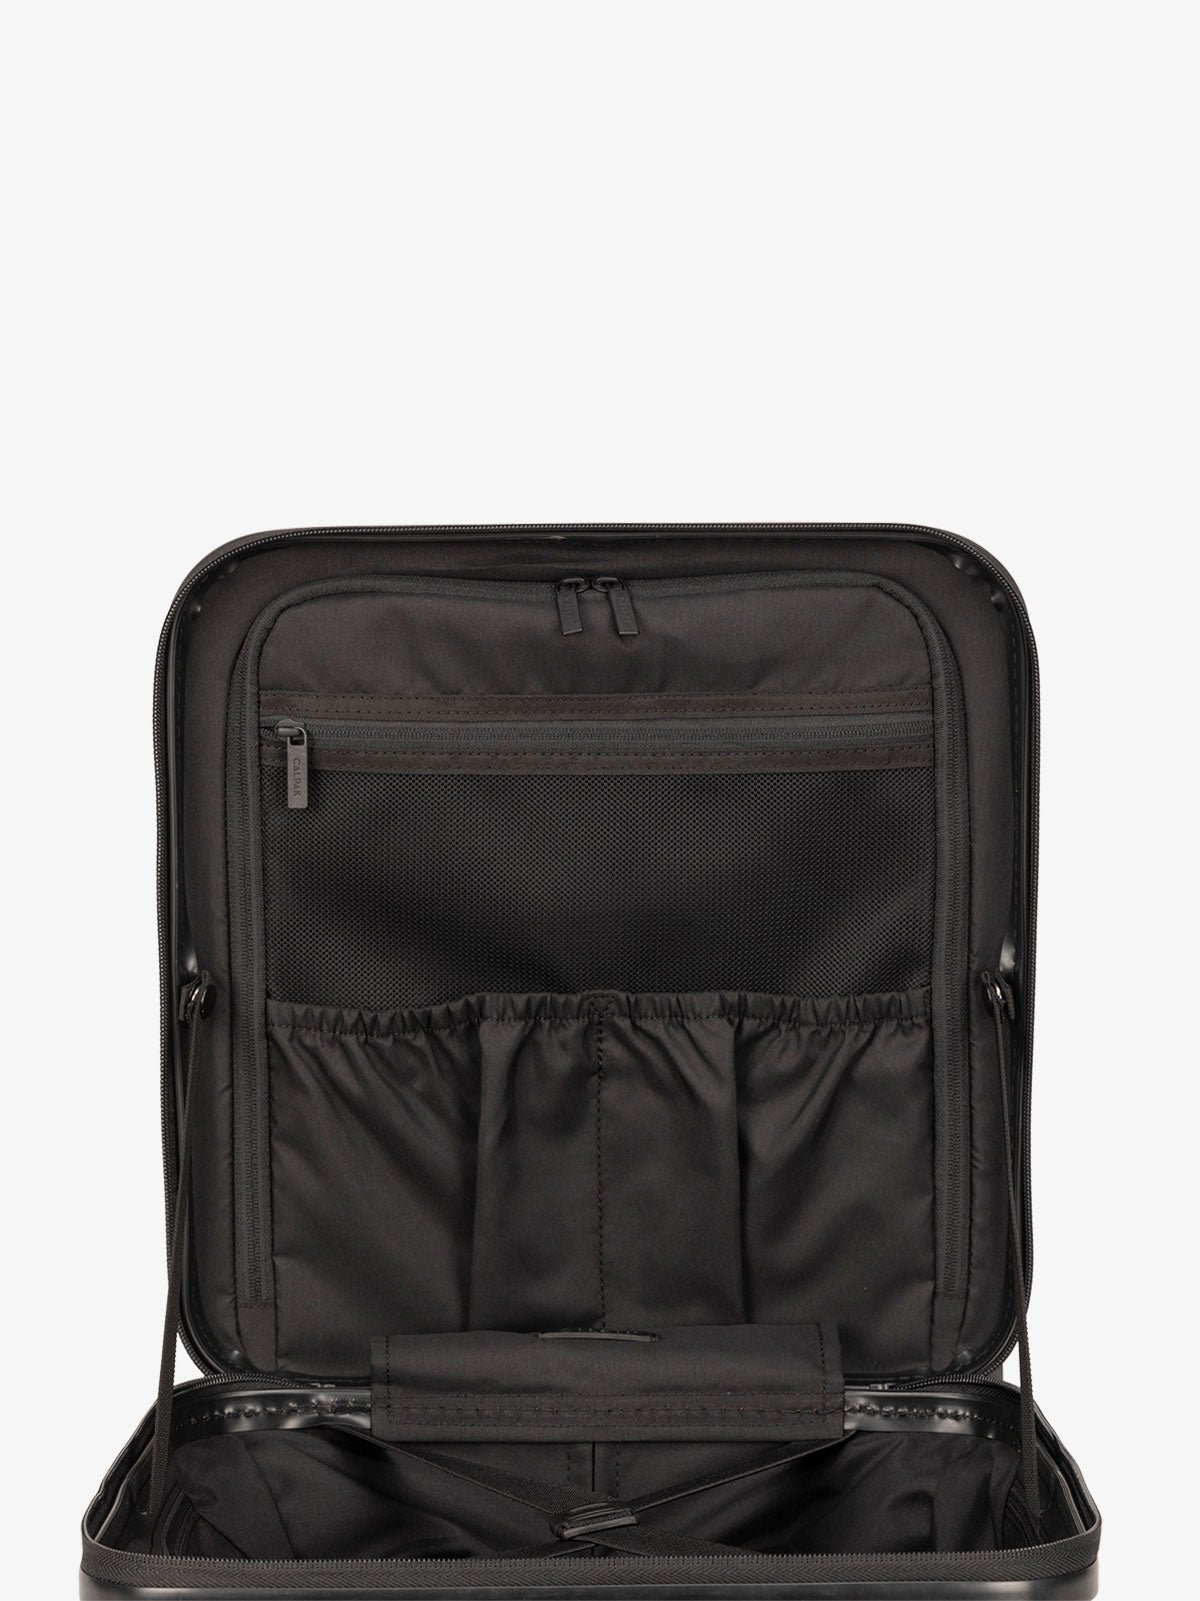 Hue mini carry on luggage zippered pockets